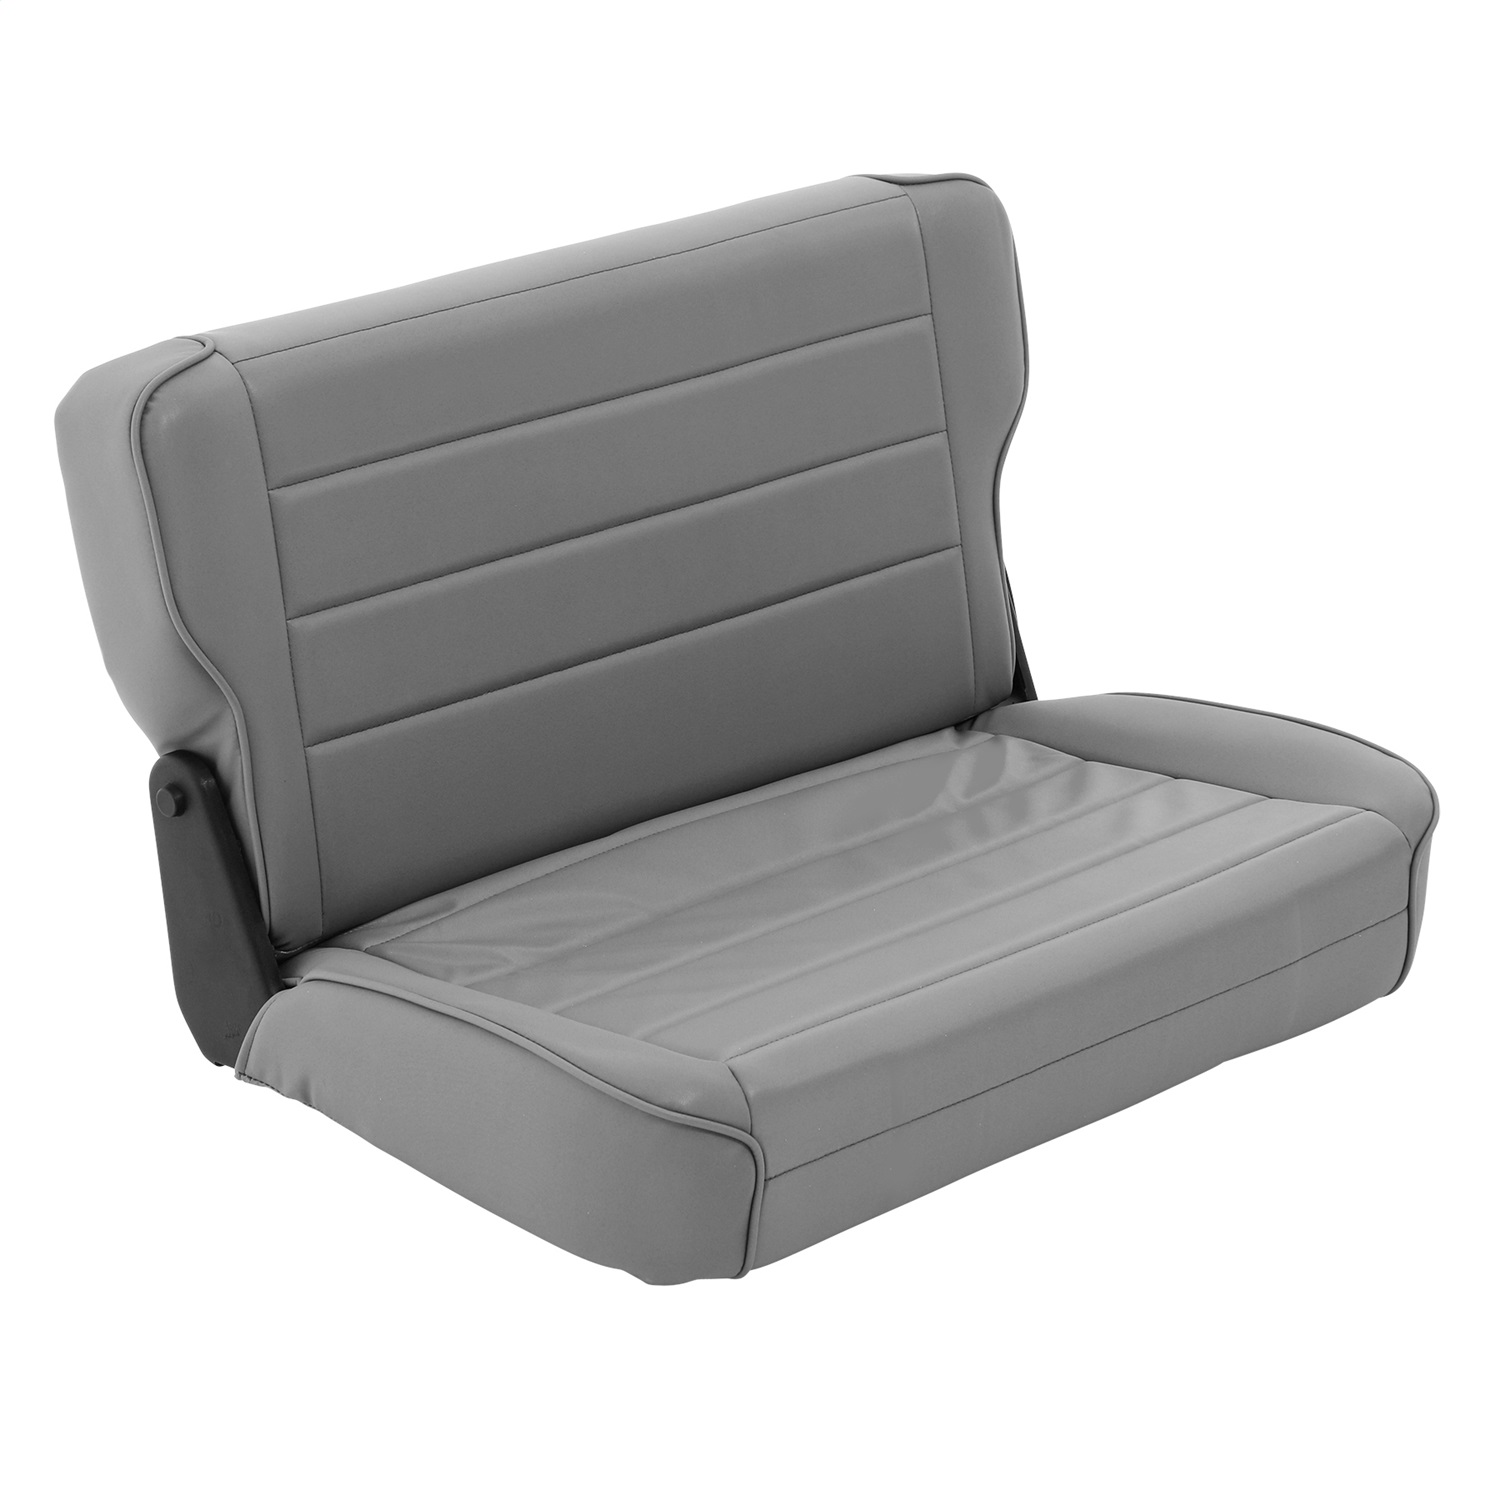 Smittybilt 41311 Fold And Tumble Seat Fits 86-95 CJ7 Wrangler (YJ)